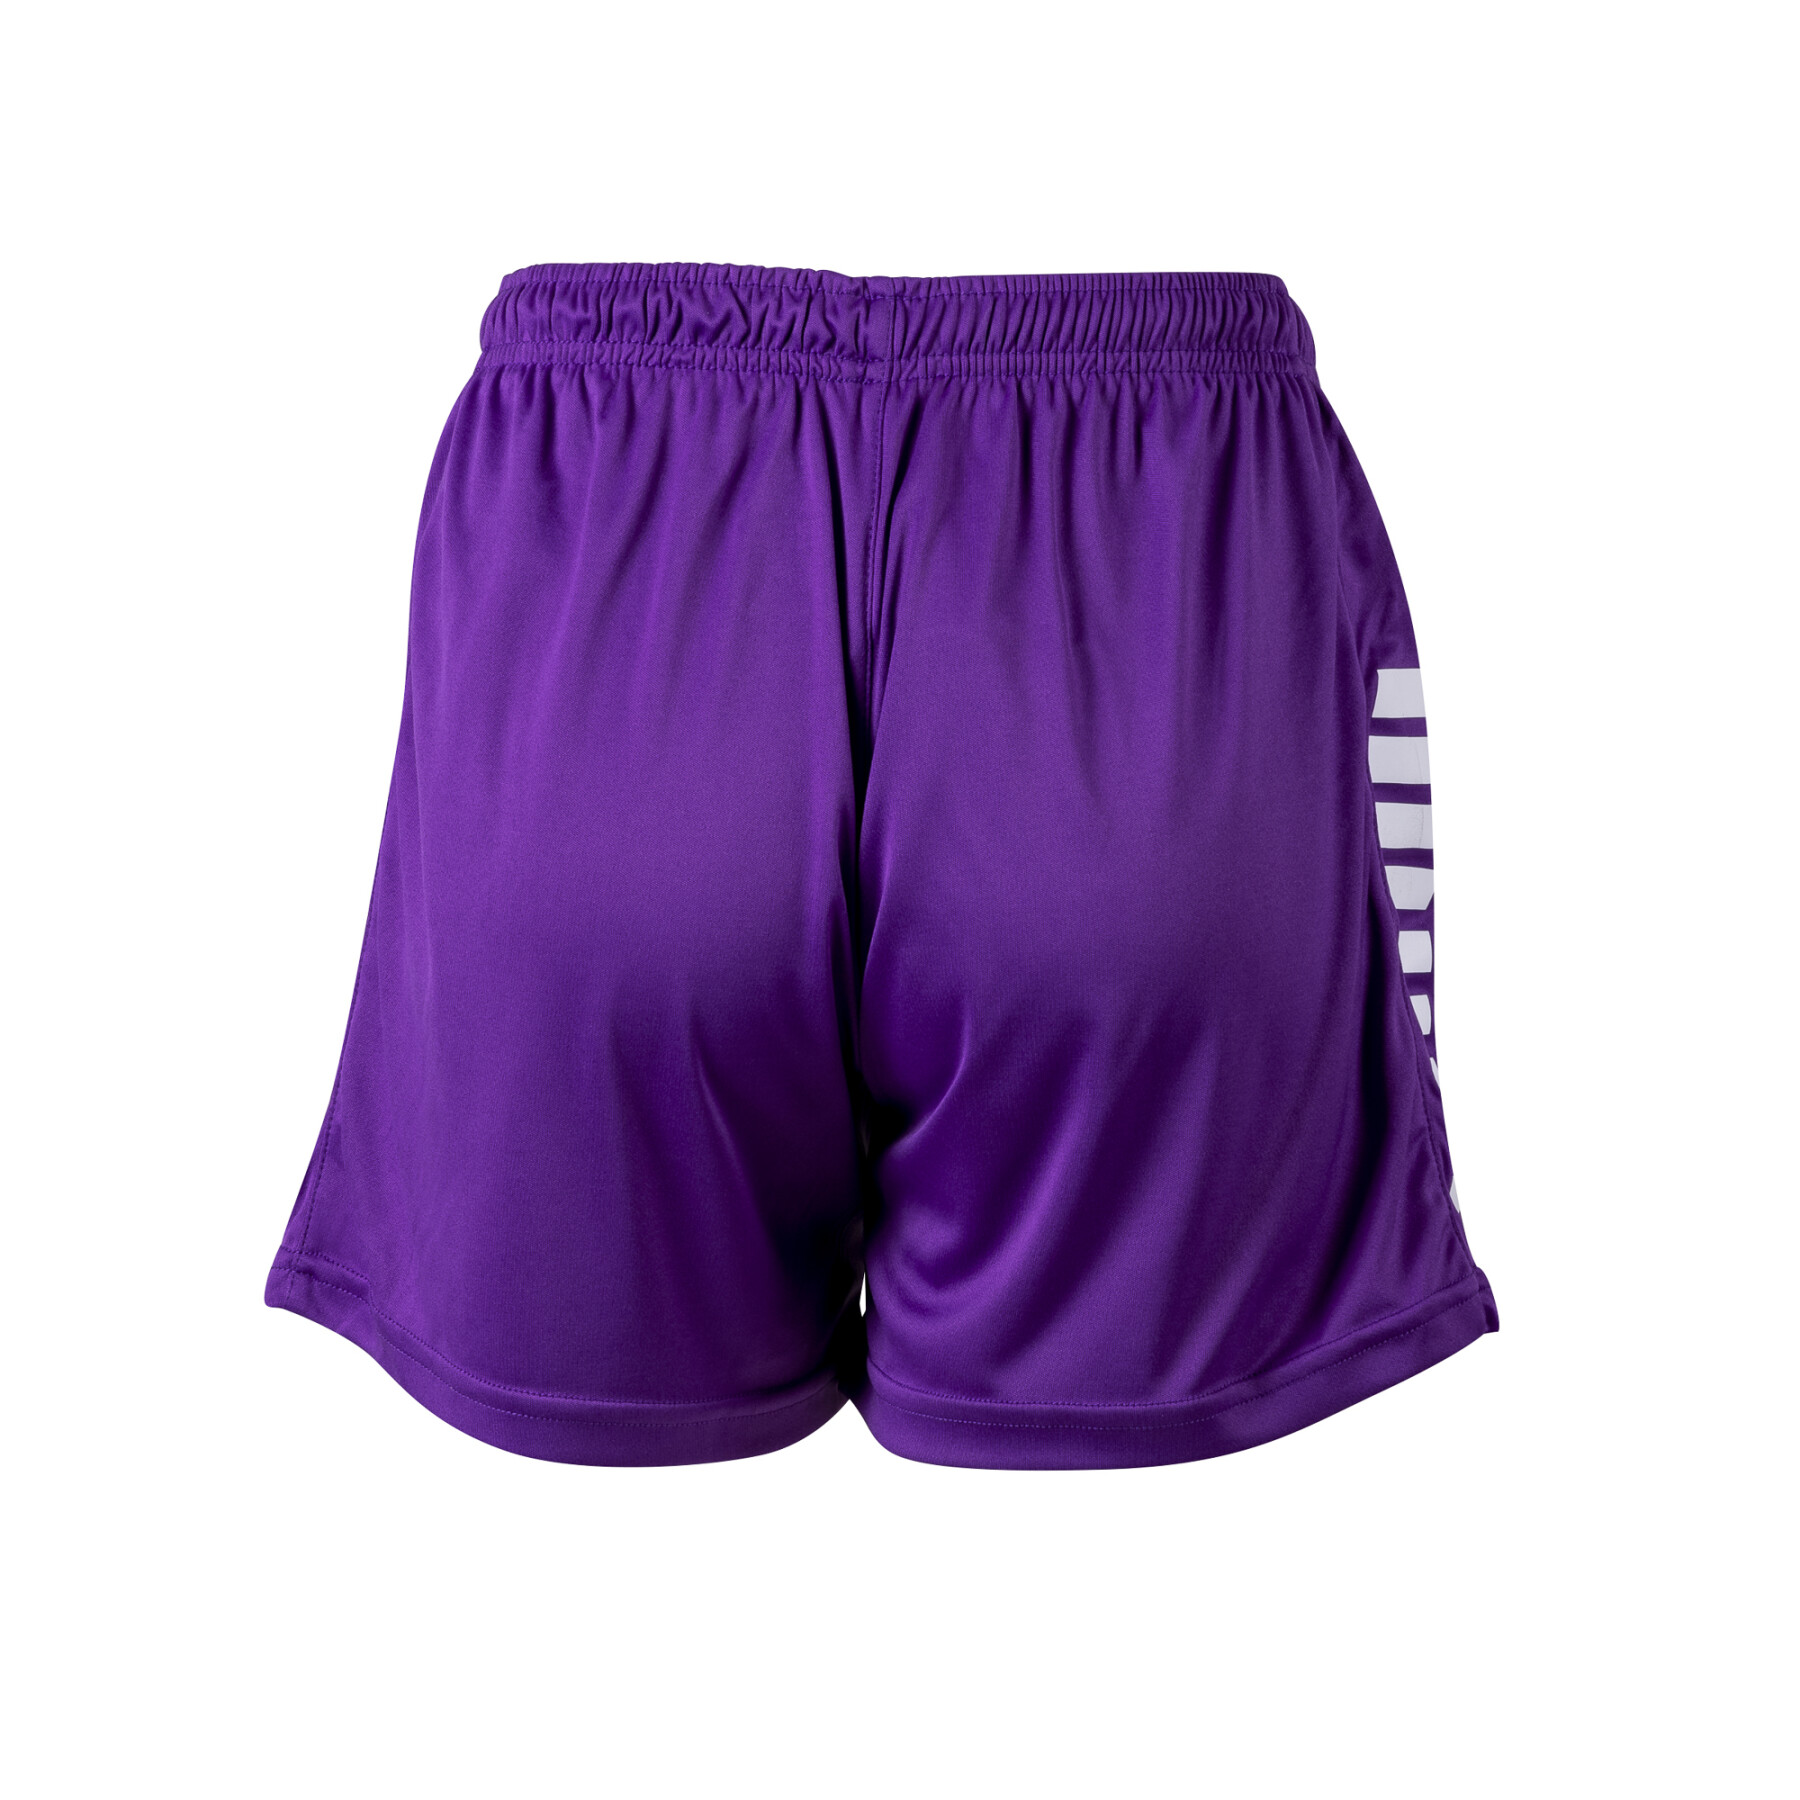 Women's shorts player vitro 